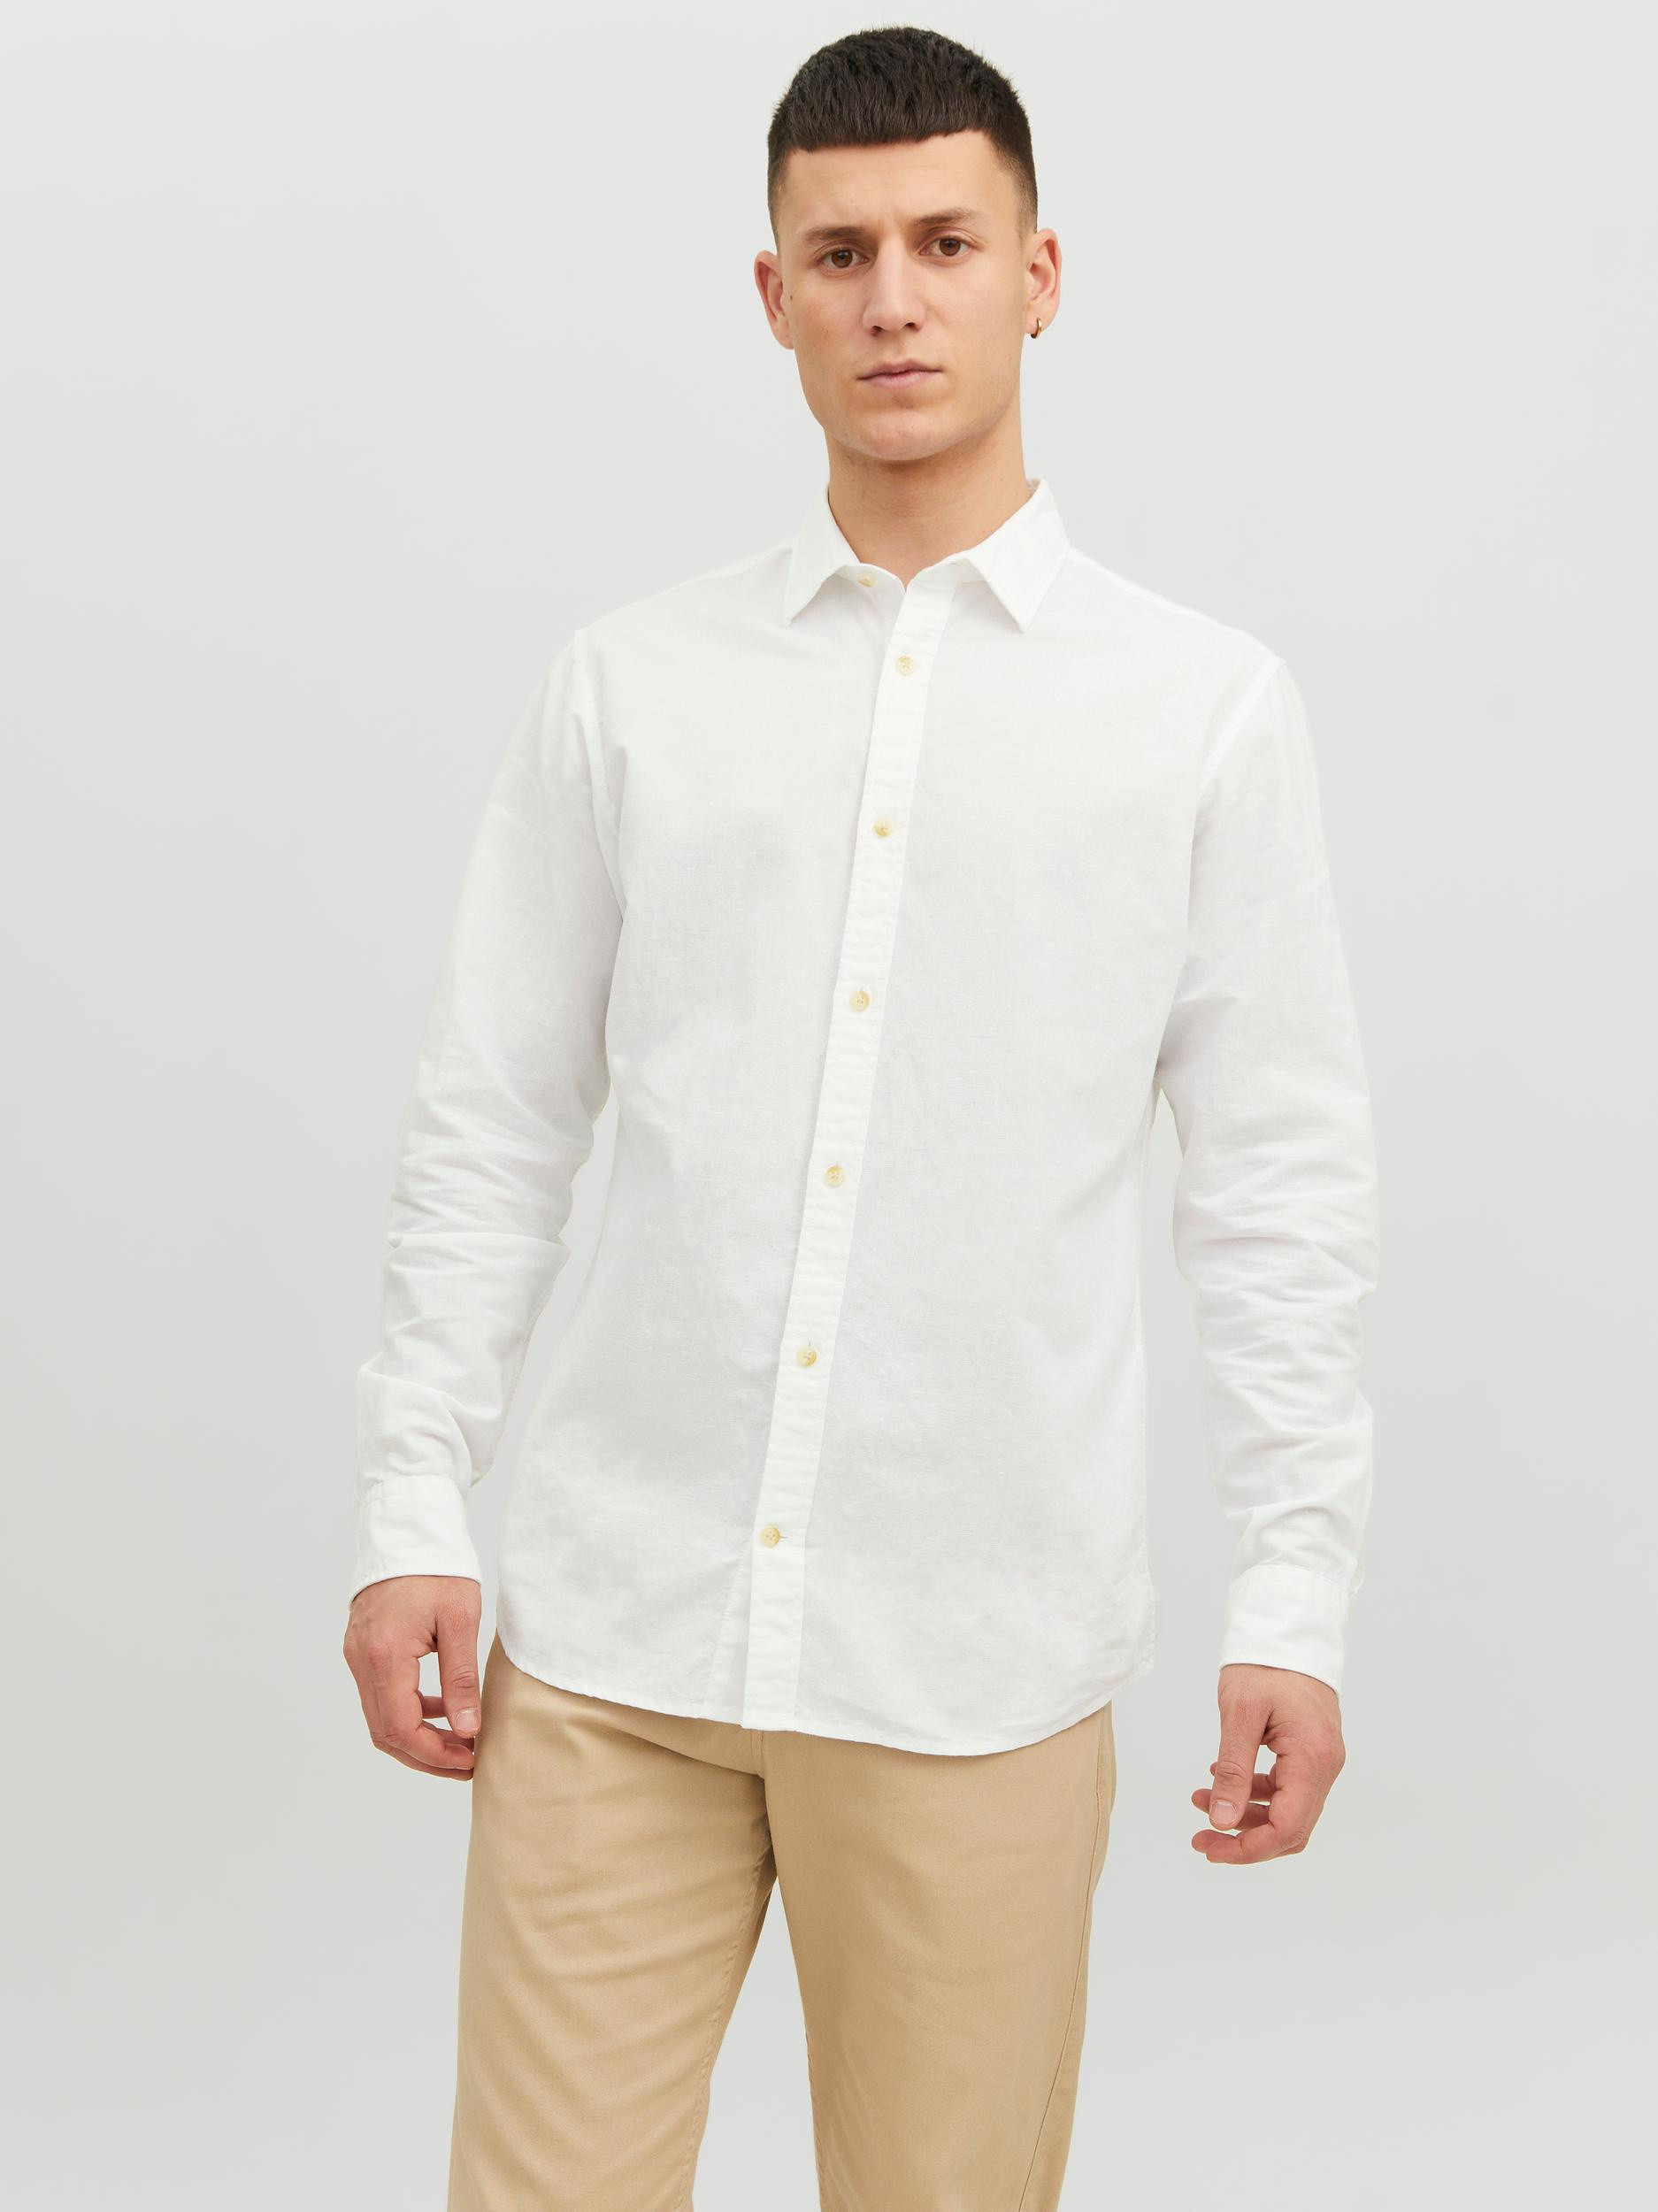 Jack & Jones - Slim fit shirt, White, large image number 3